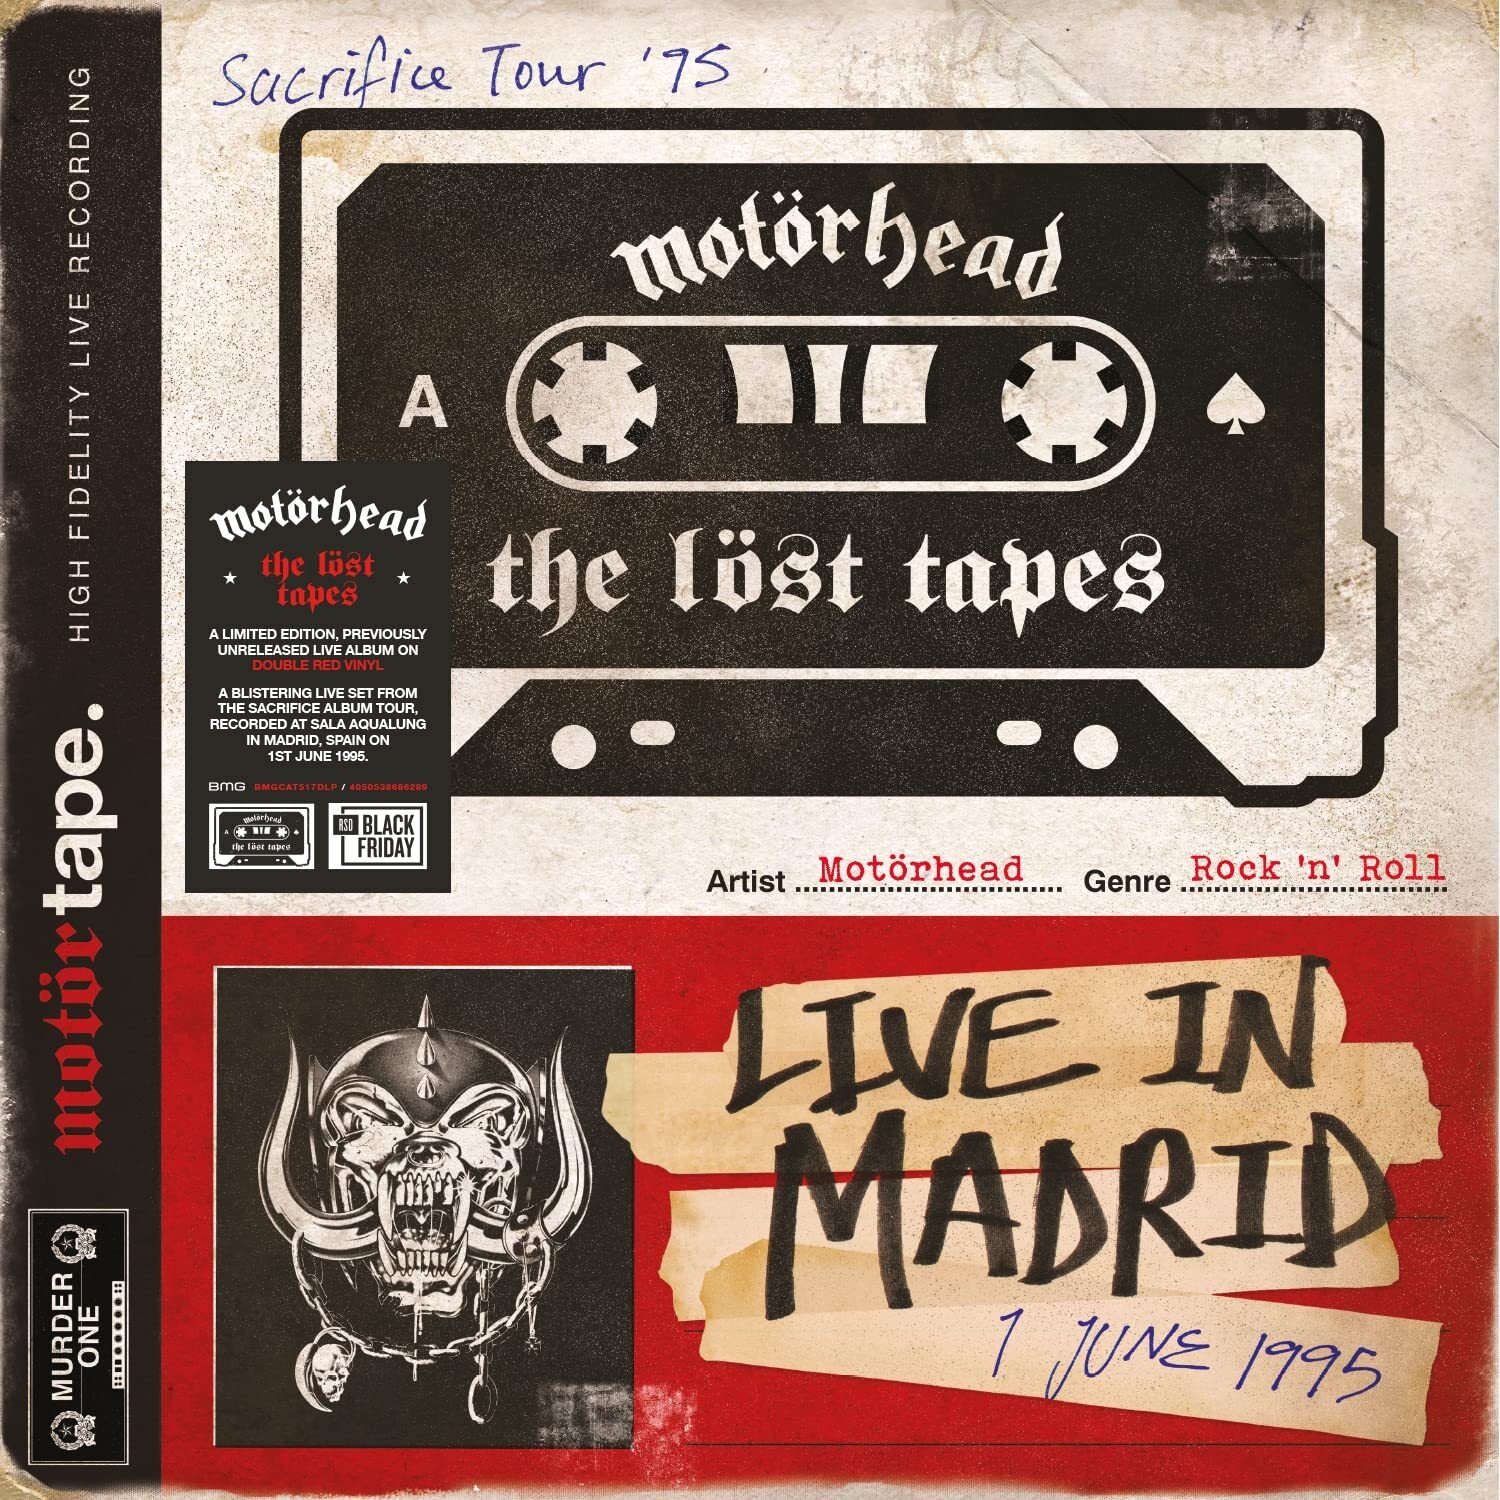 Виниловая Пластинка Motorhead The Lost Tapes Vol. 1 (Live In Madrid 1 June 1995) (4050538686289) рок sony music strokes the comedown machine coloured vinyl lp